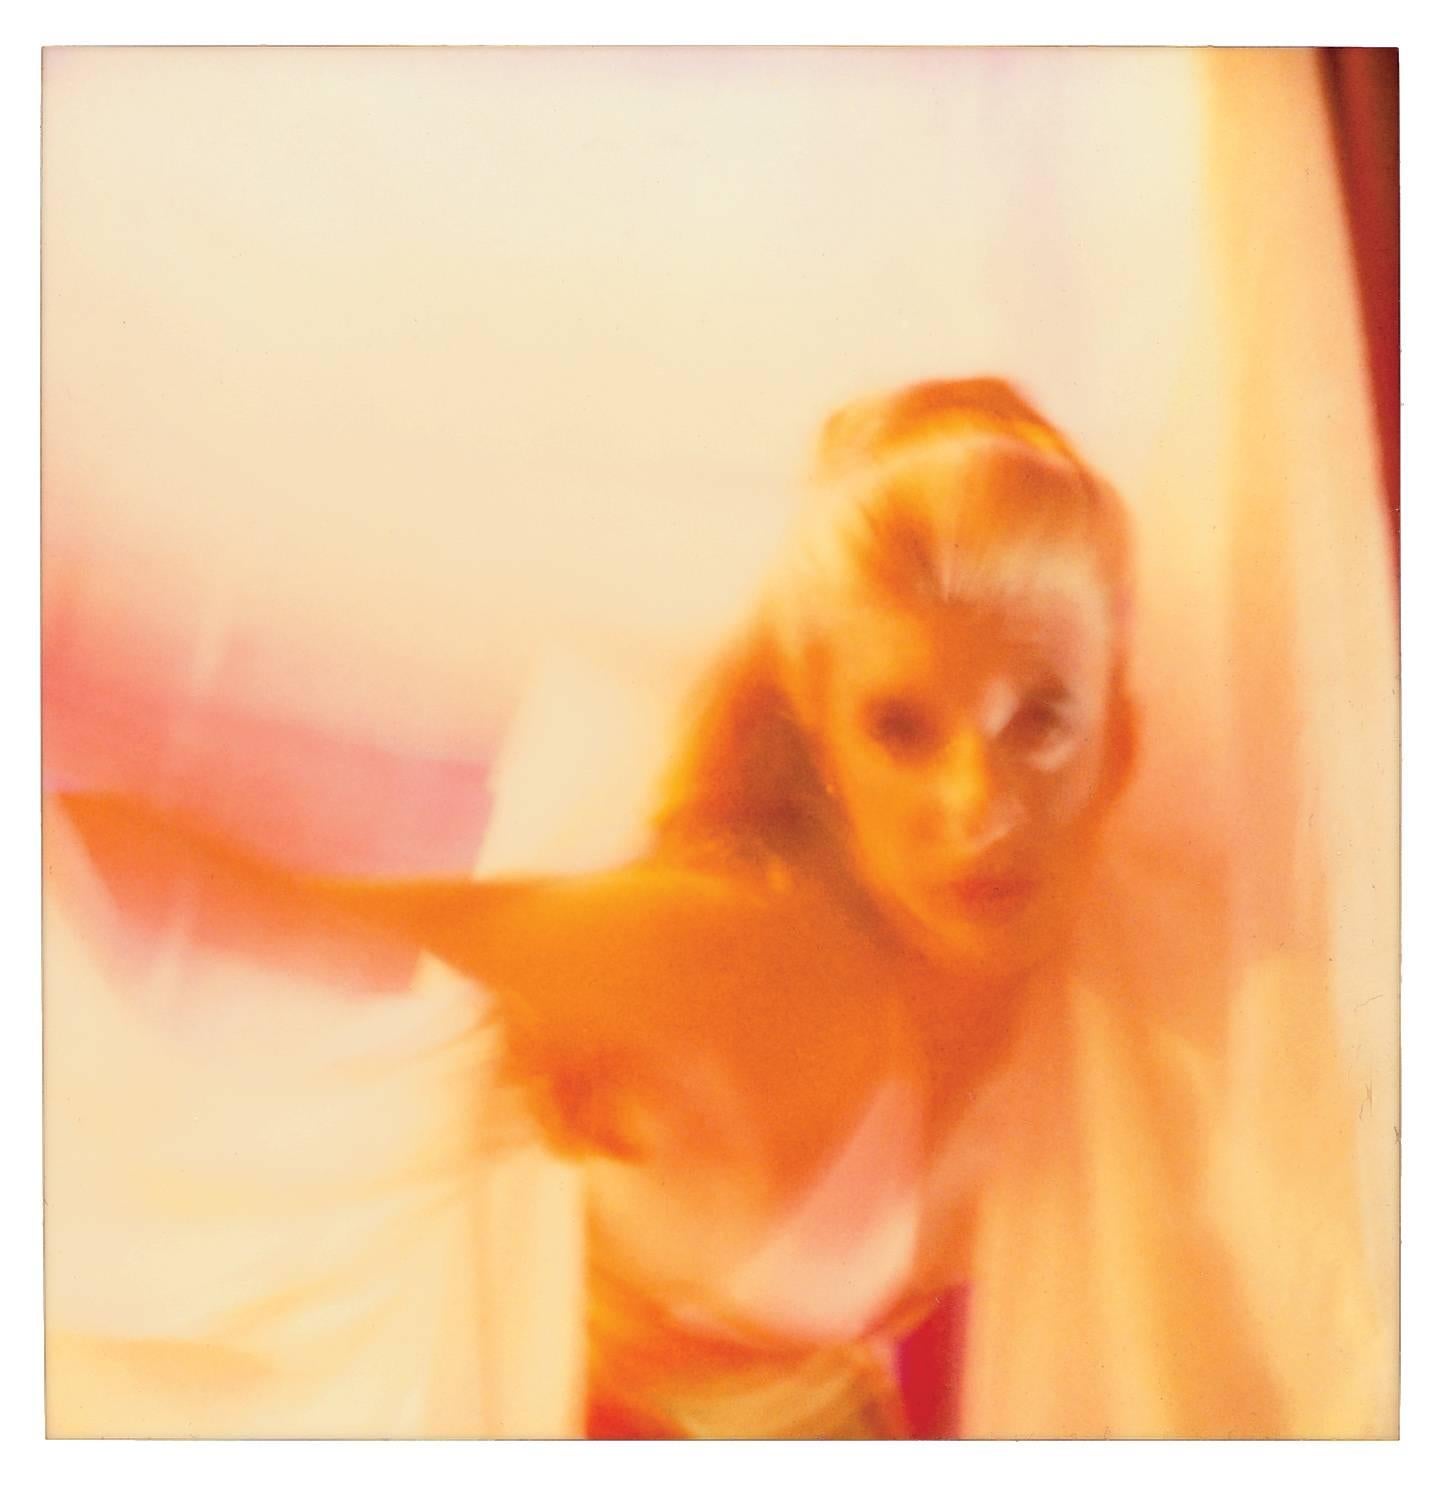 Dancer (Stay) - 8 pieces, analog, Polaroid, Contemporary, 21st Century, Color - Photograph by Stefanie Schneider